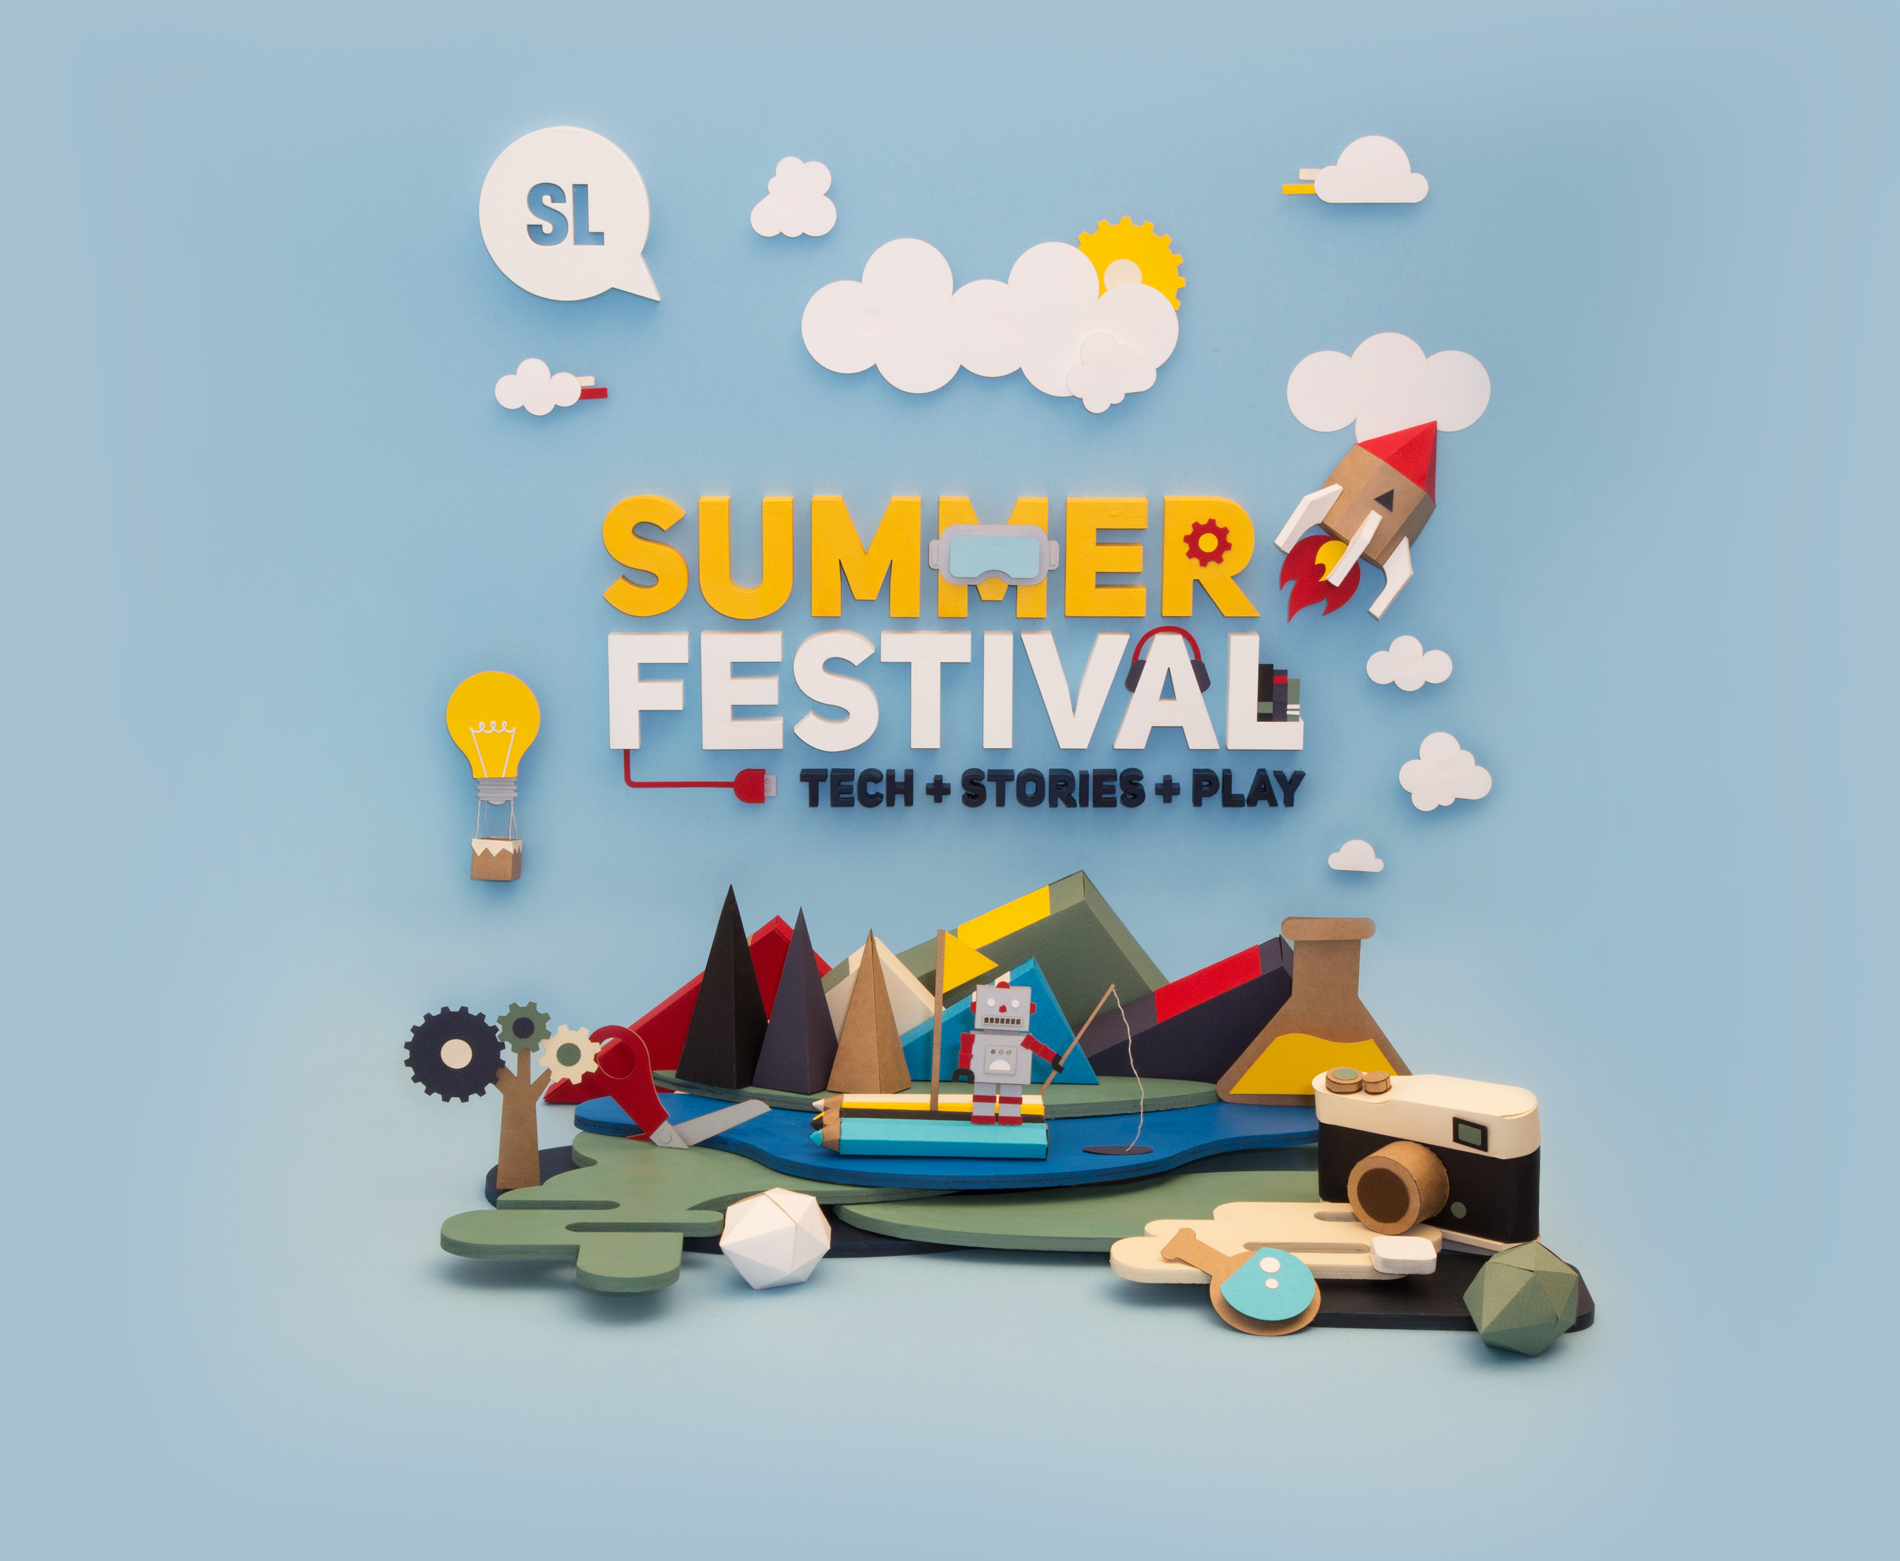 https://westendmagazine.com - Summerfestival